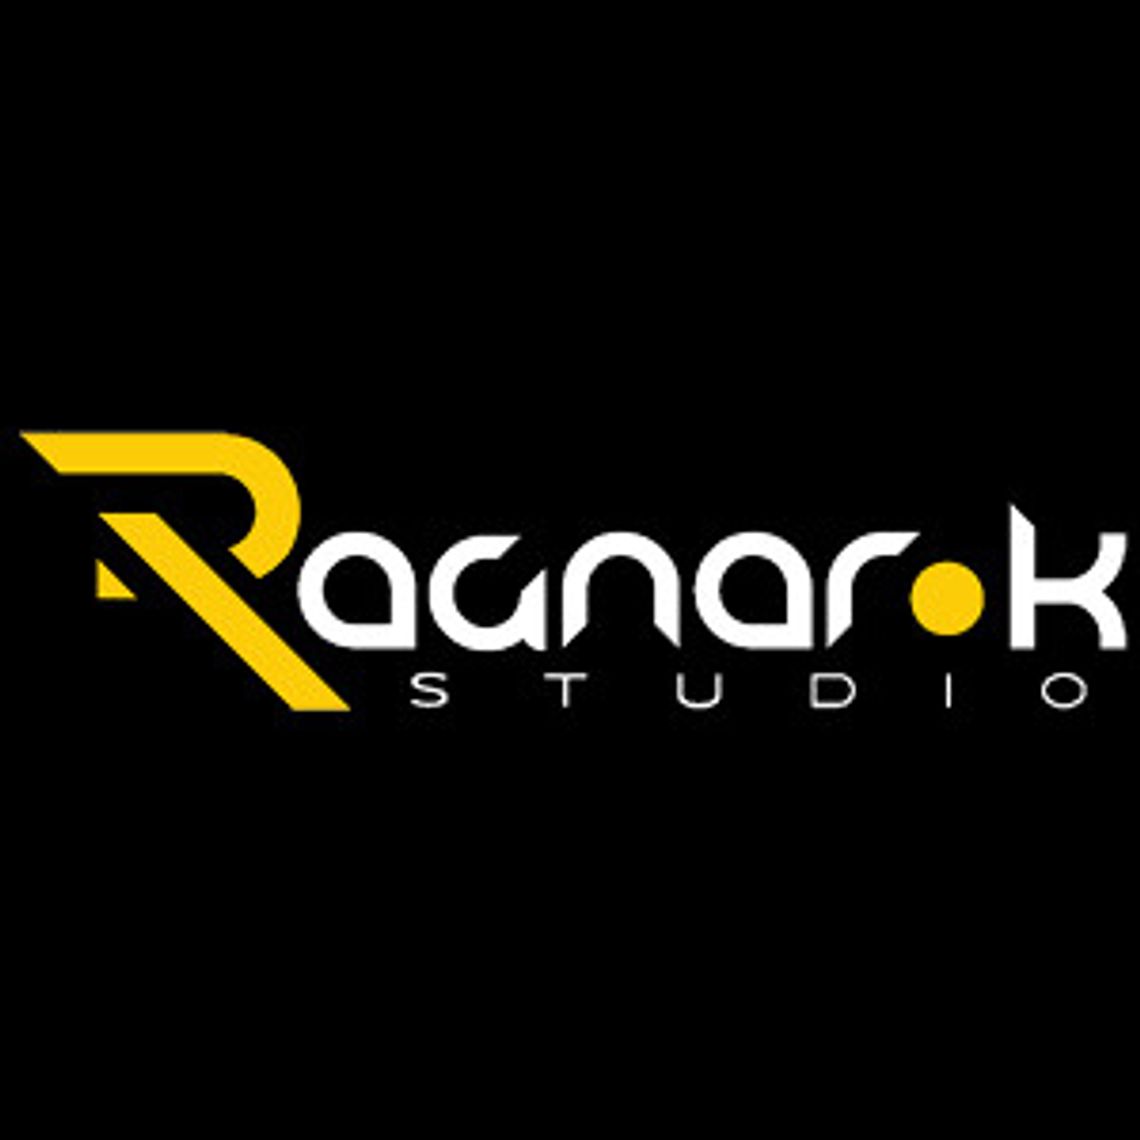 Identyfikacja wizualna brandu - Ragnarok Studio